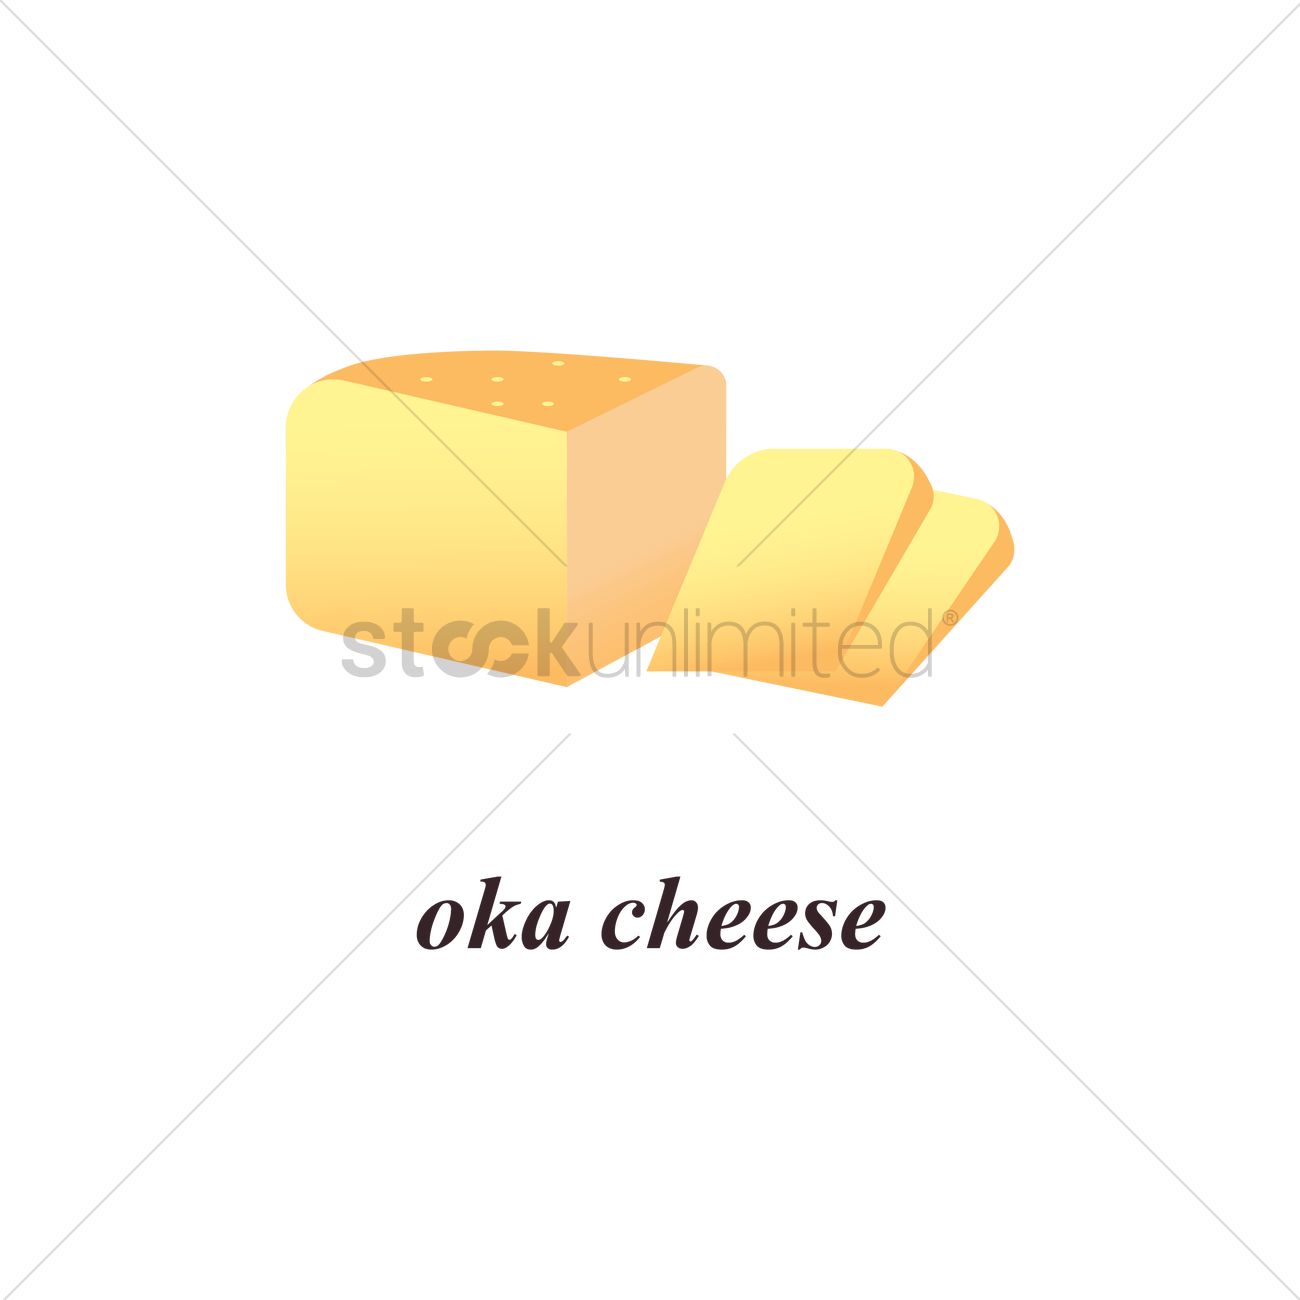 Oka cheese Vector Image.